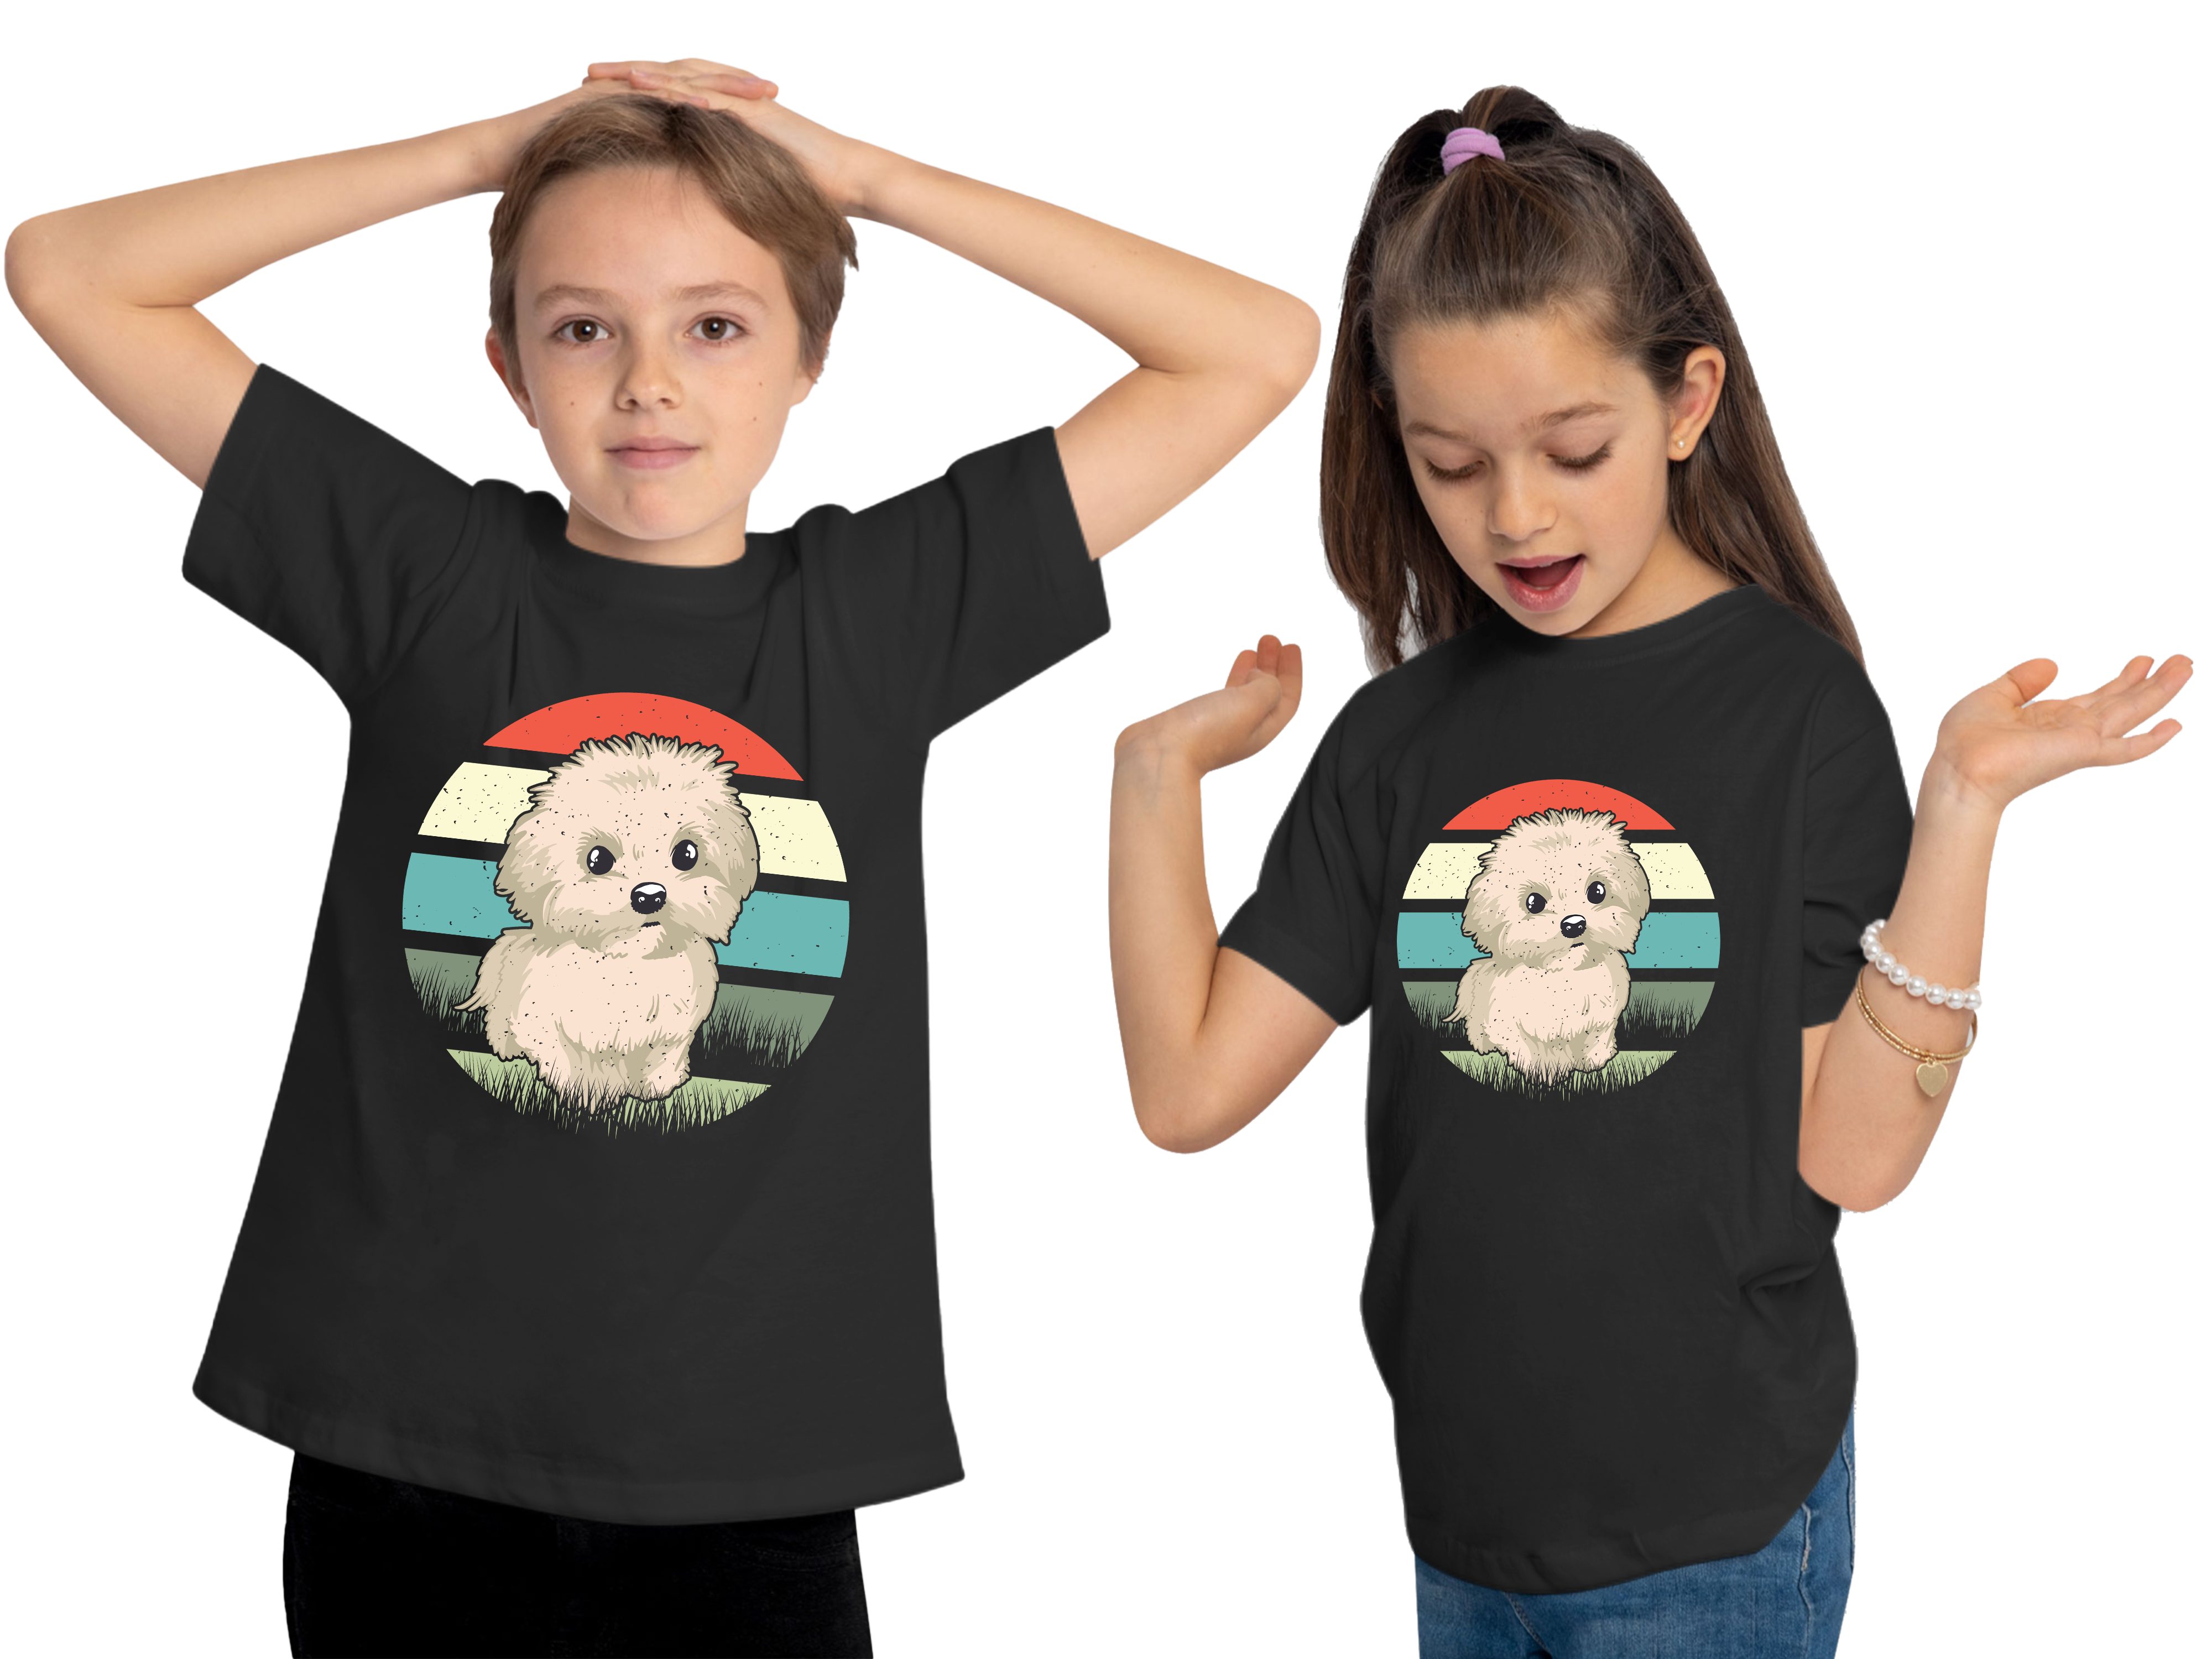 MyDesign24 Print-Shirt i242 mit Baumwollshirt Kinder schwarz Welpen T-Shirt - Hunde Aufdruck, Malteser bedruckt Retro